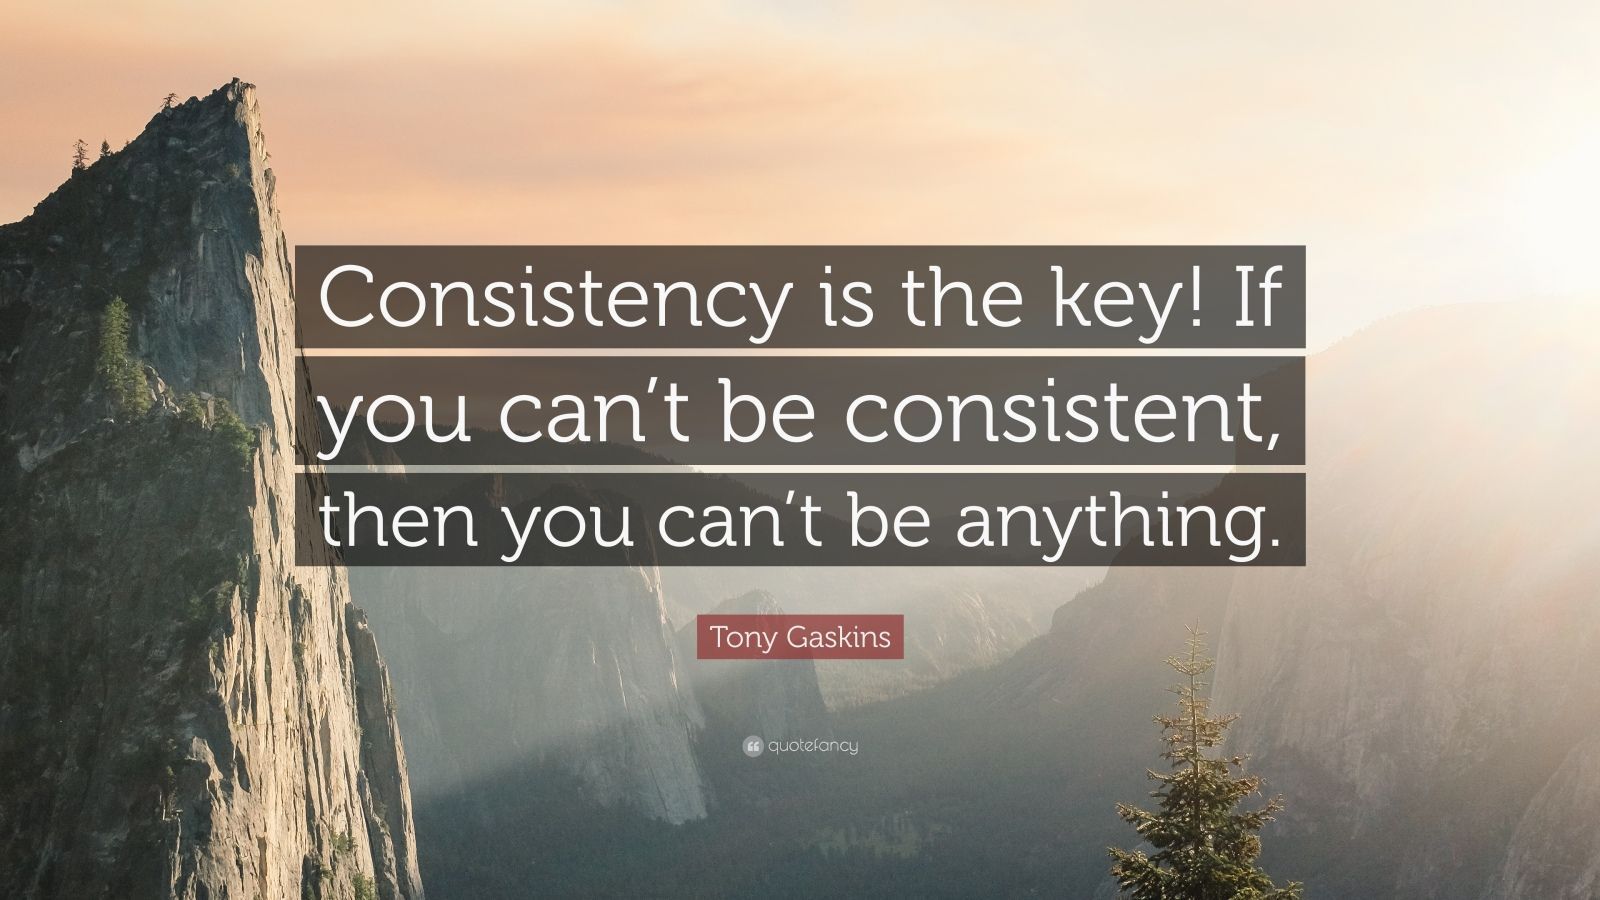 Tony Gaskins Quote: “Consistency isquotefancy.com